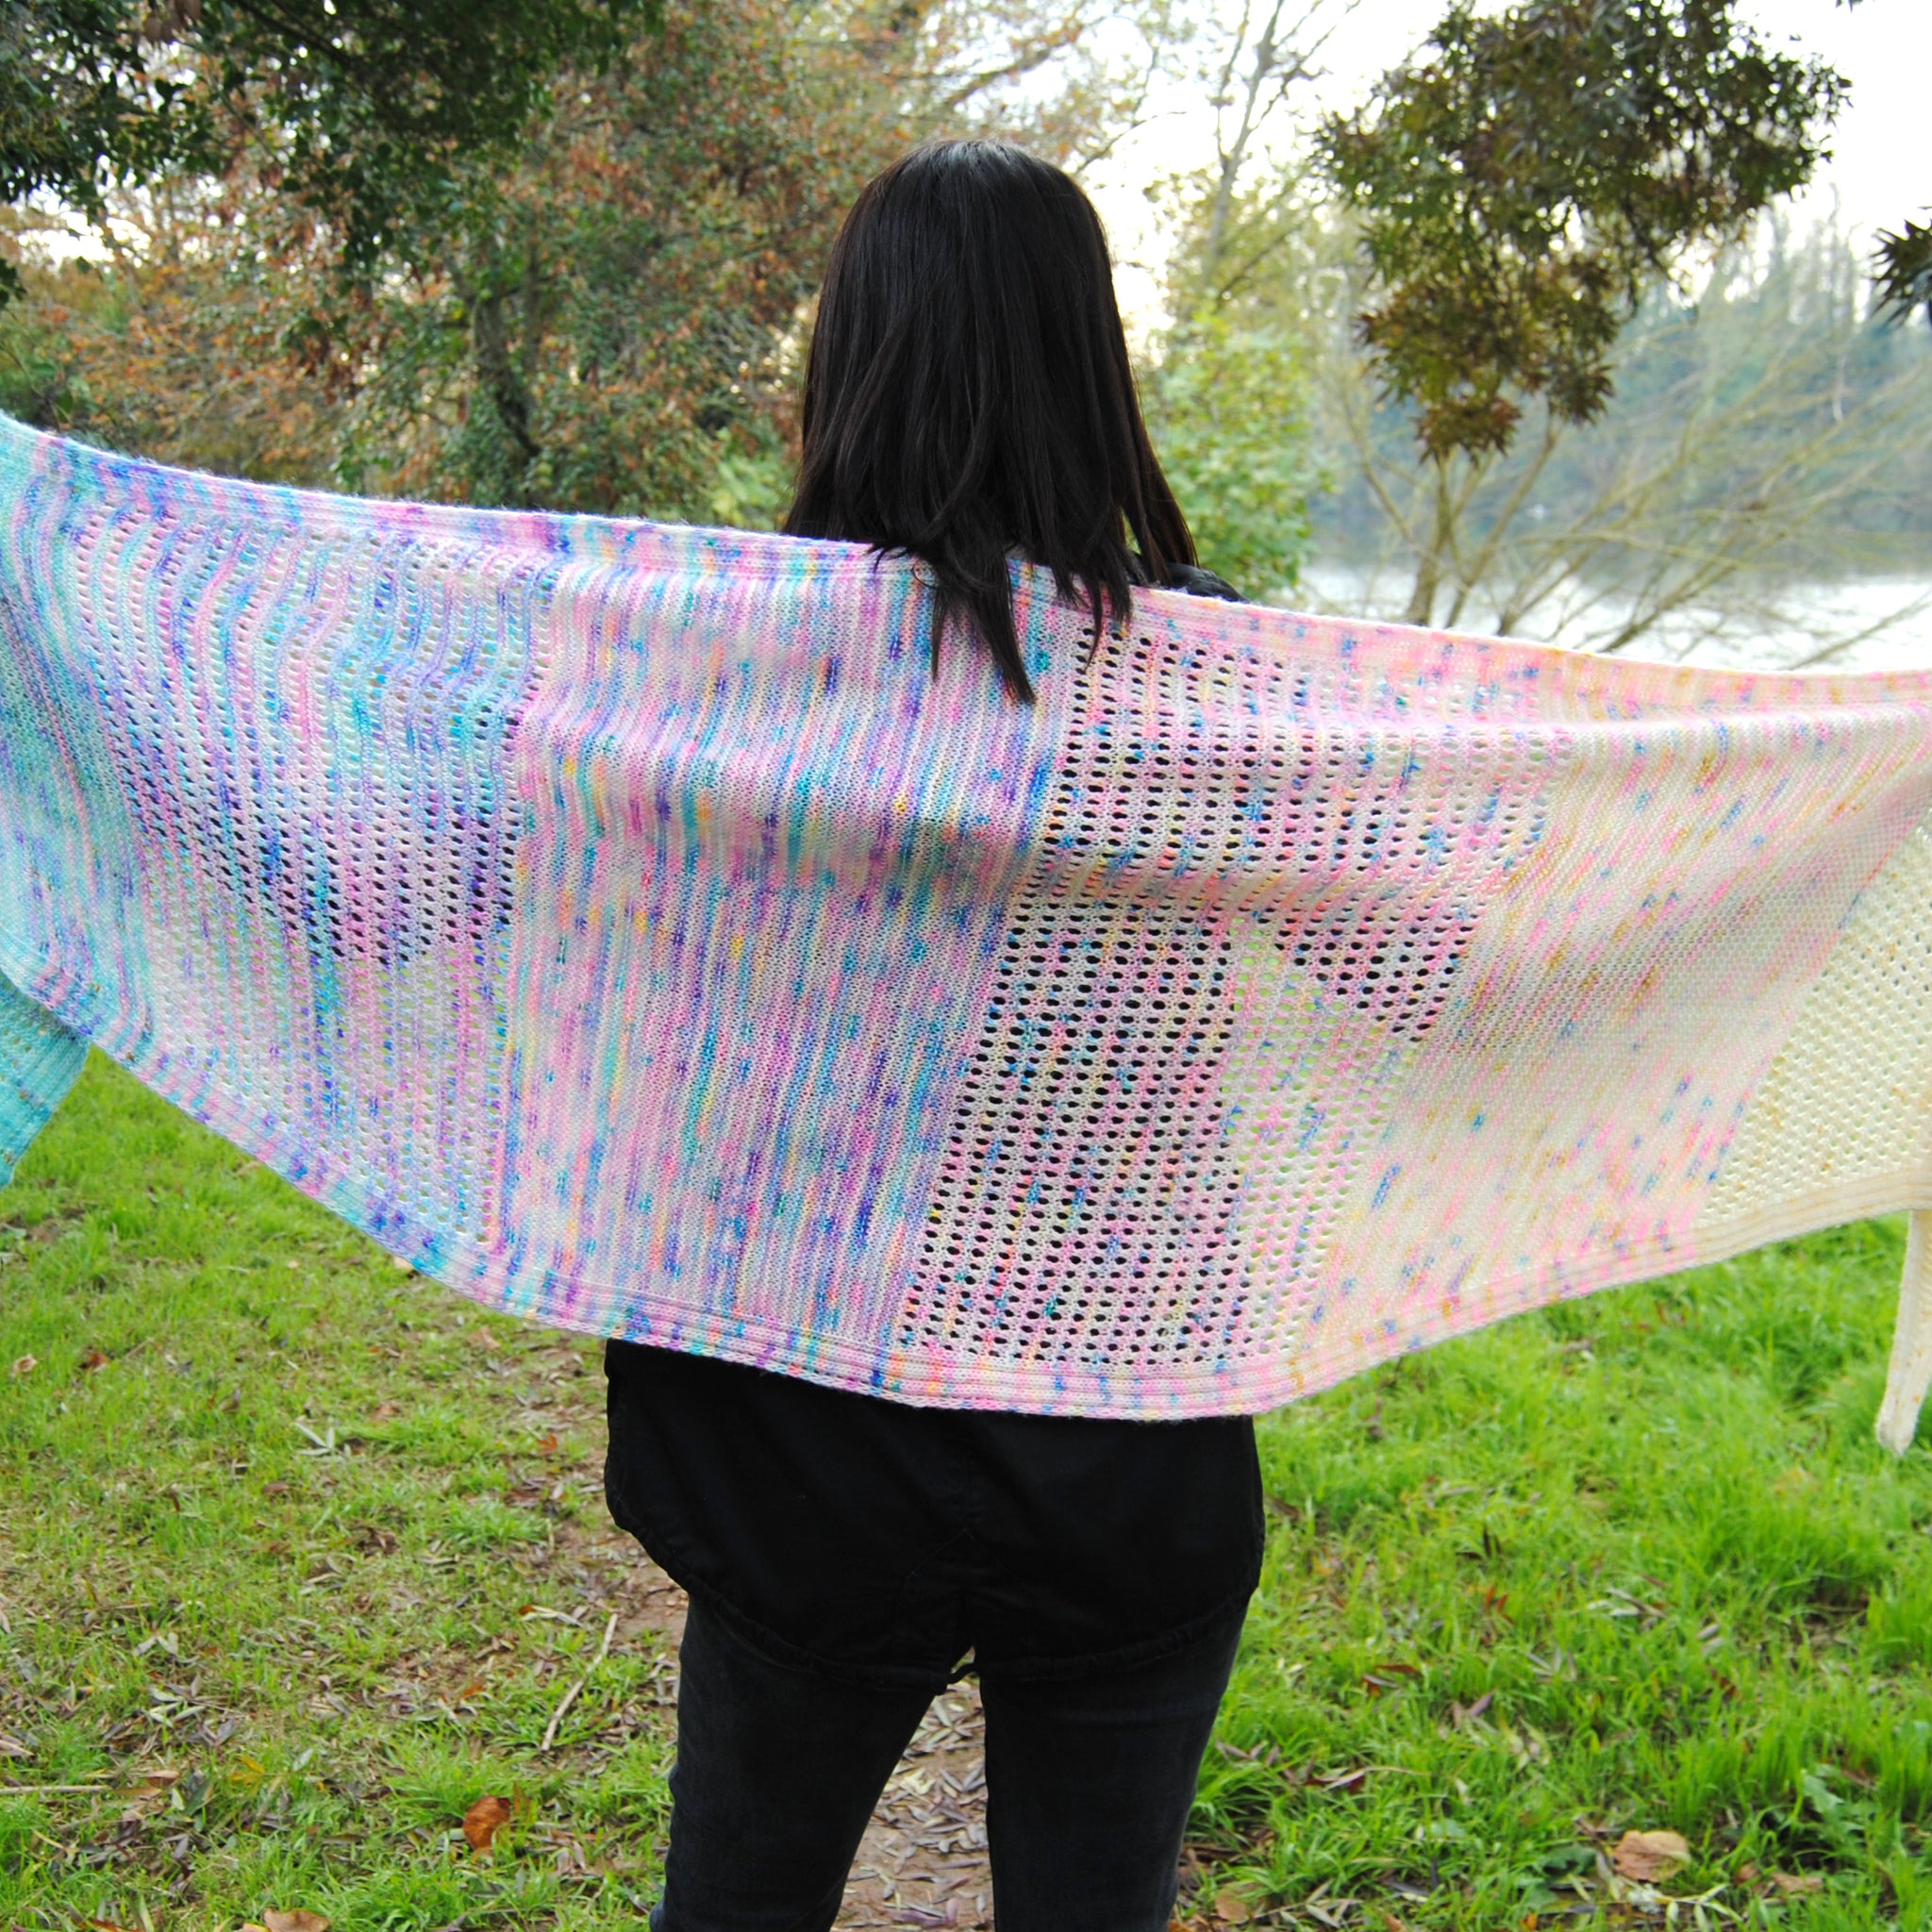 Moon cloud shawl set "Dreamer" size Small - Artemis single